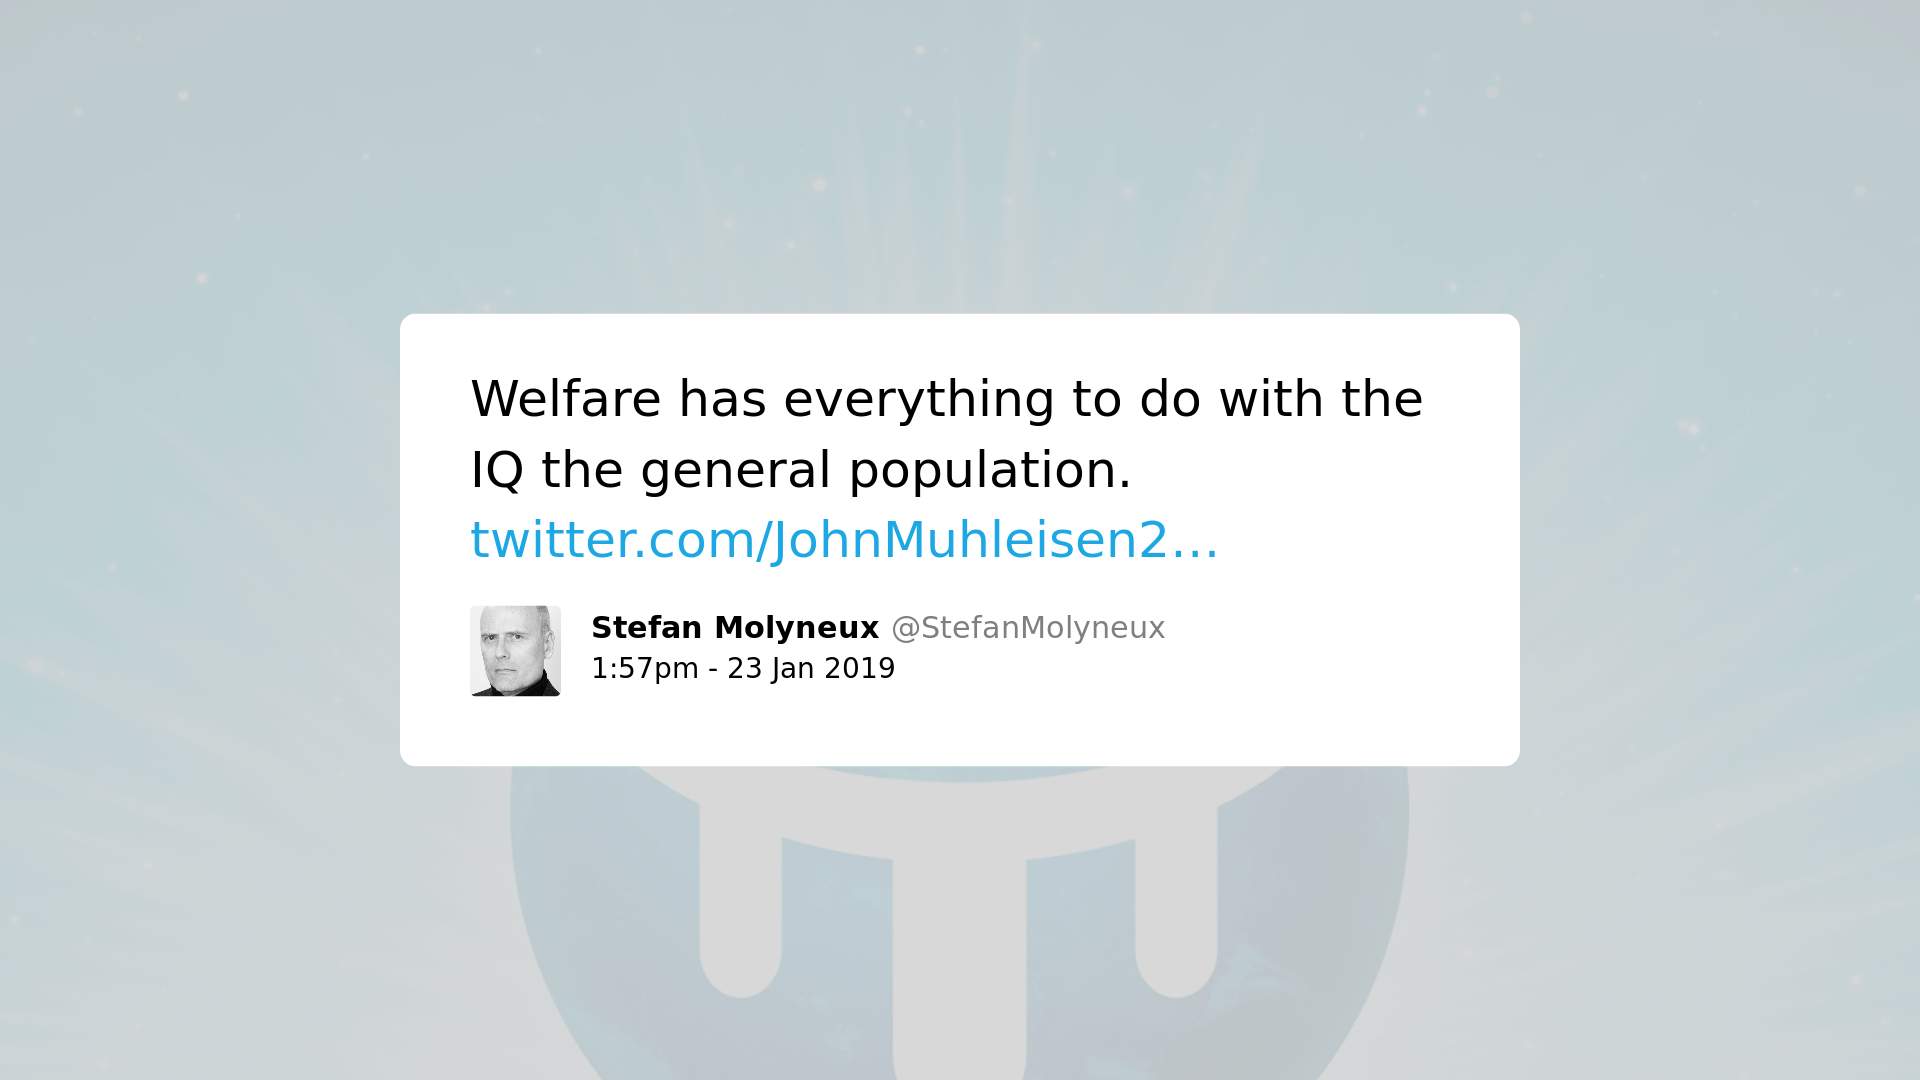 Print screen de postagem de Stefan Molyneaux com o texto: Welfare has everything to do with the IG the general population. 